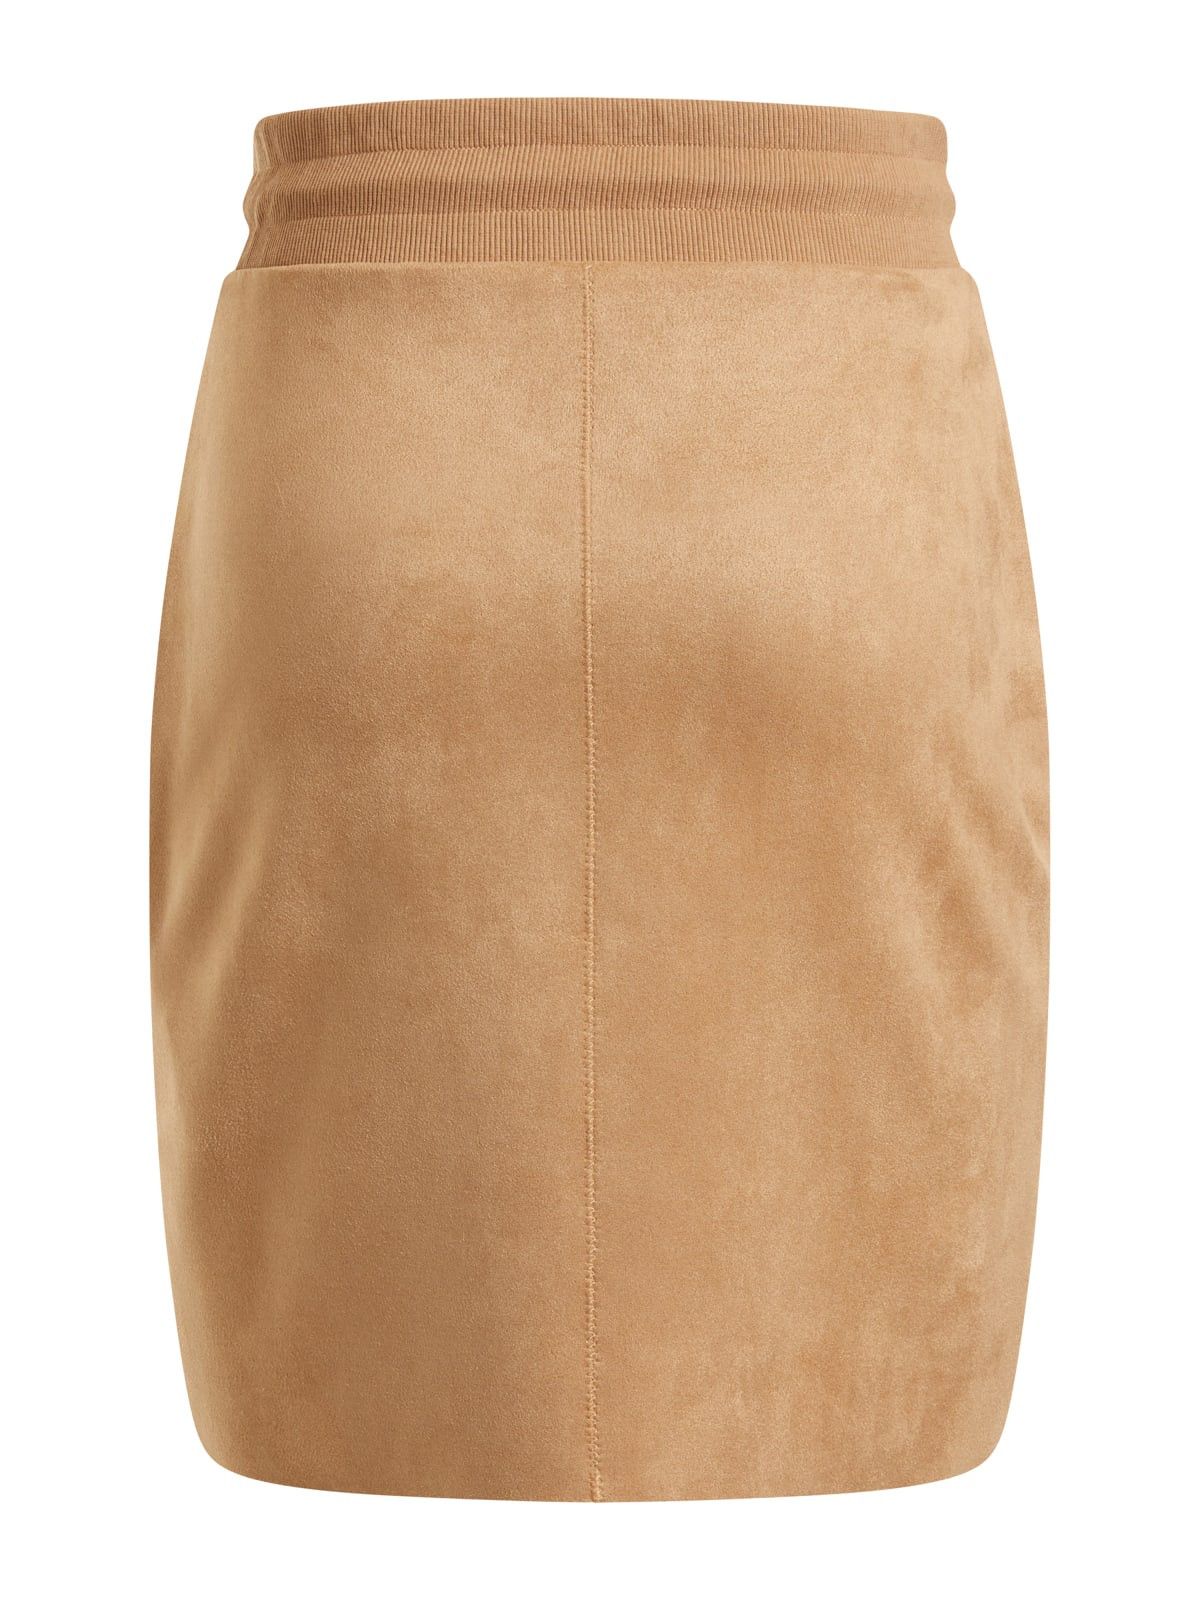 Suede-like skirt, Beige, large image number 1